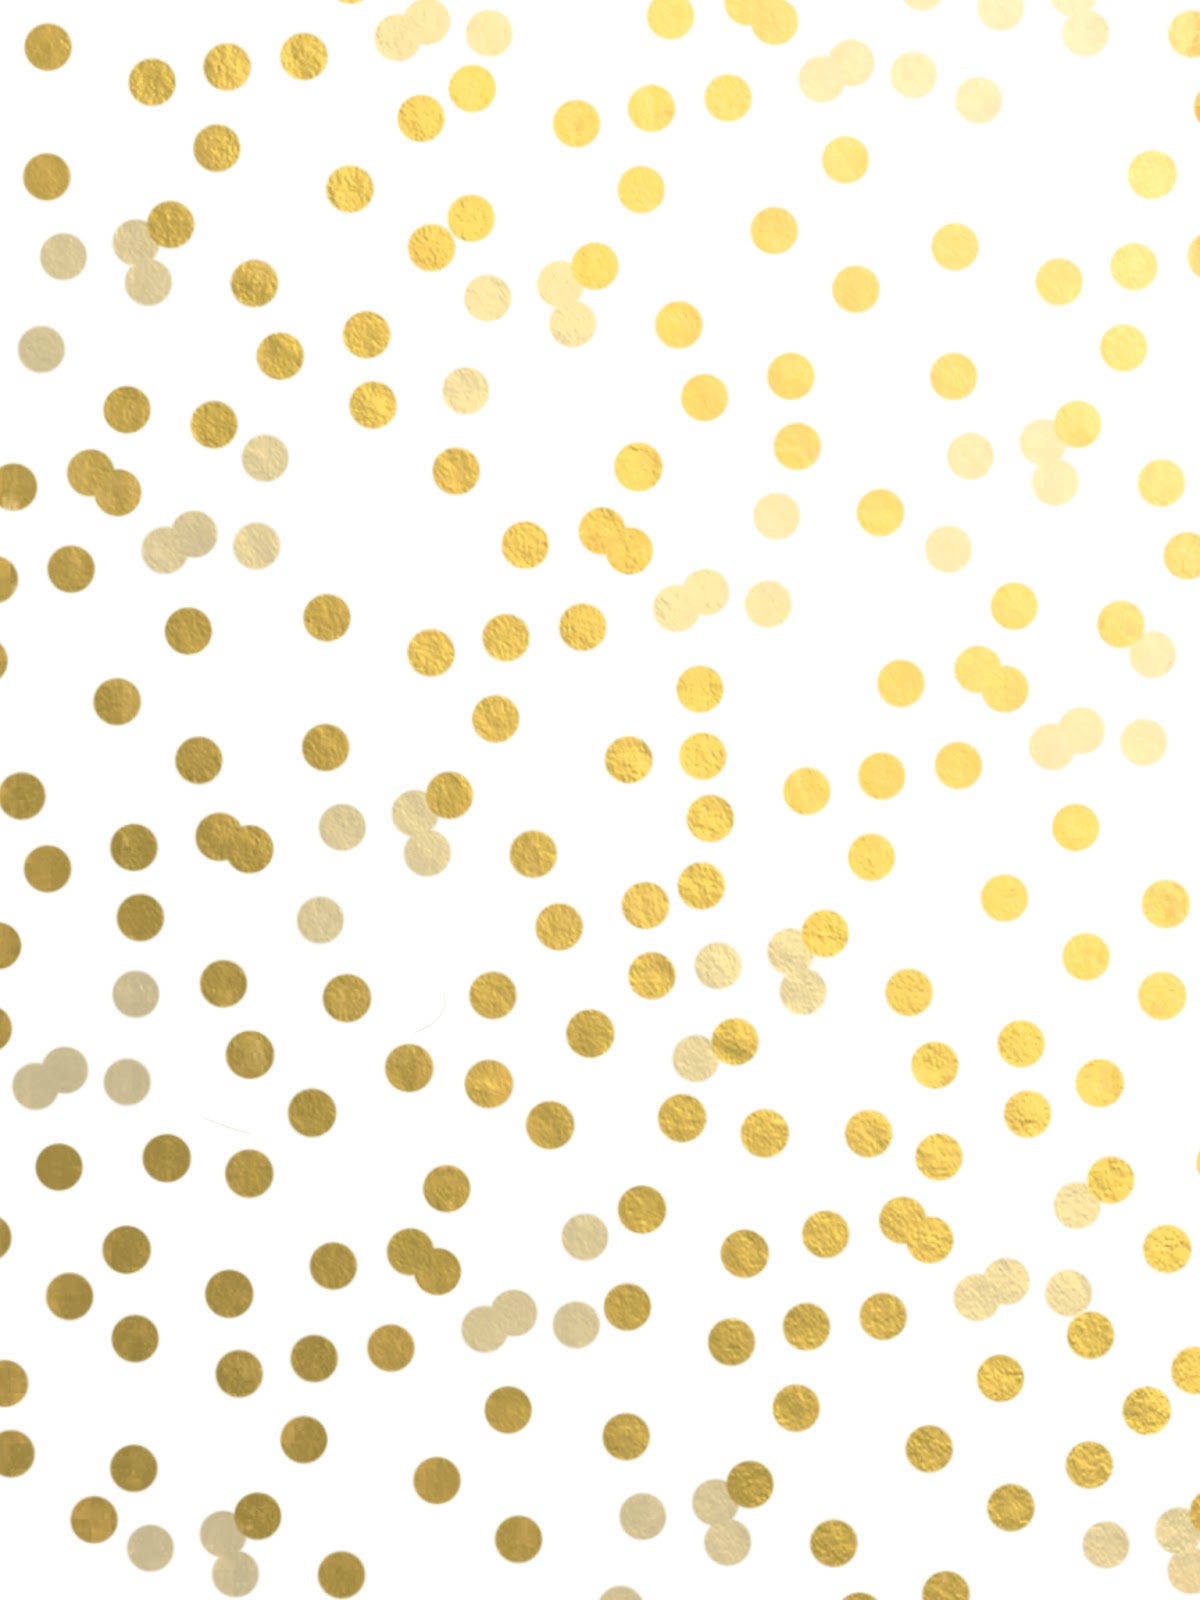 Kate Spade Gold Polka Dot Wallpaper - Polka Dot Wallpaper Gold , HD Wallpaper & Backgrounds